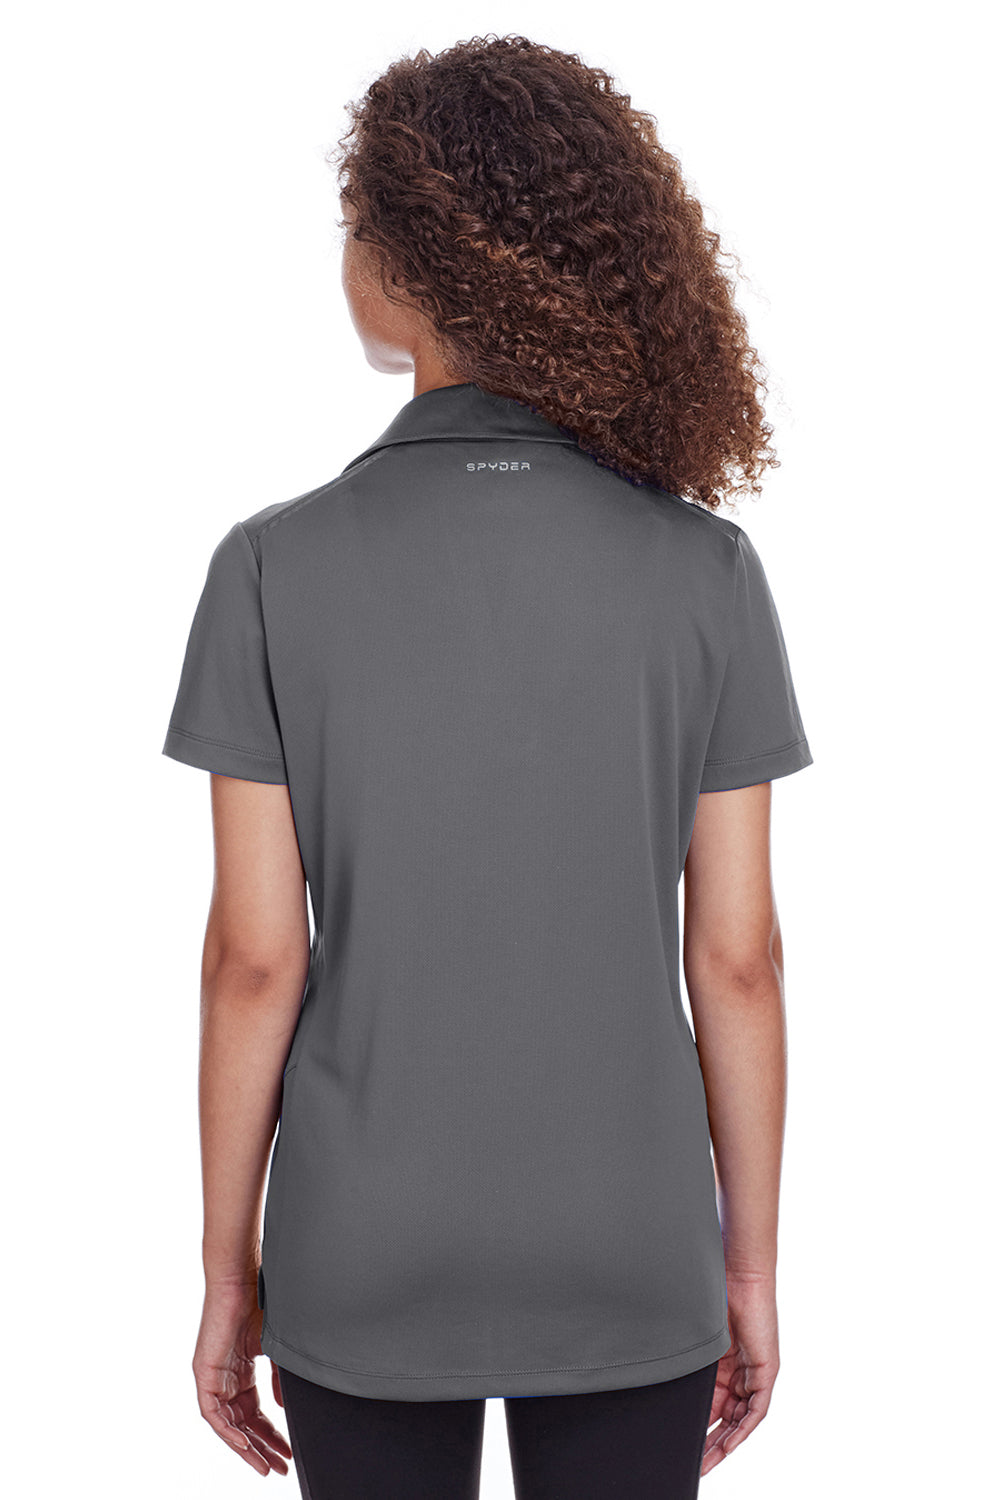 Spyder S16519 Womens Freestyle Short Sleeve Polo Shirt Grey Back